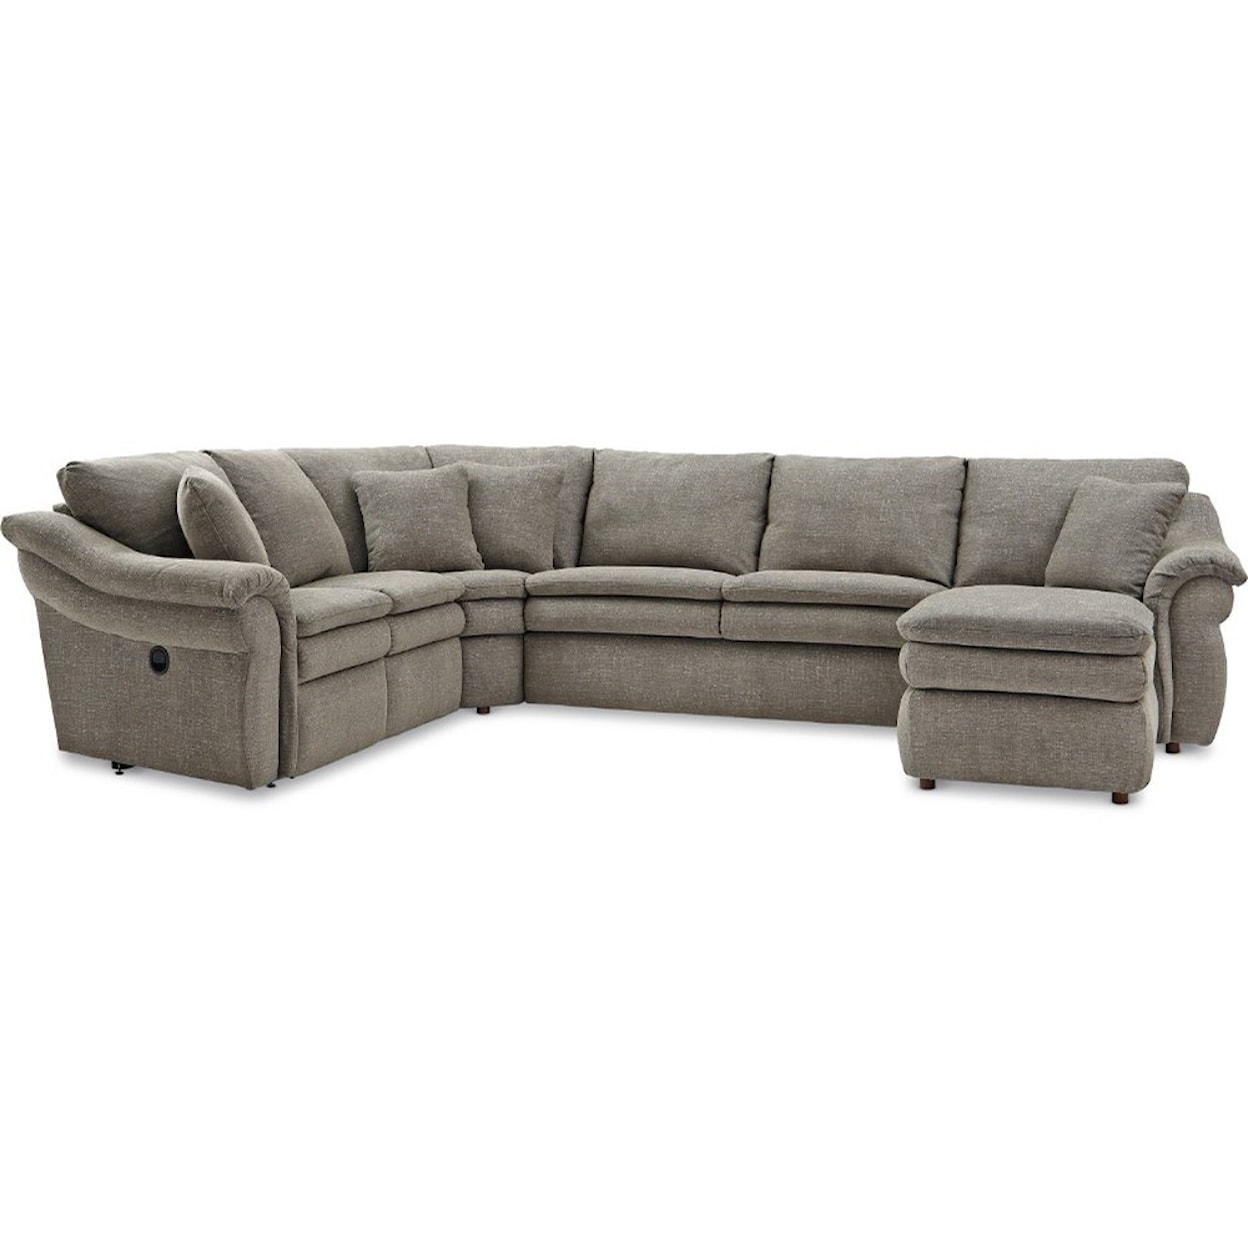 La-Z-Boy Devon Sectional Sofa with LAS Chaise